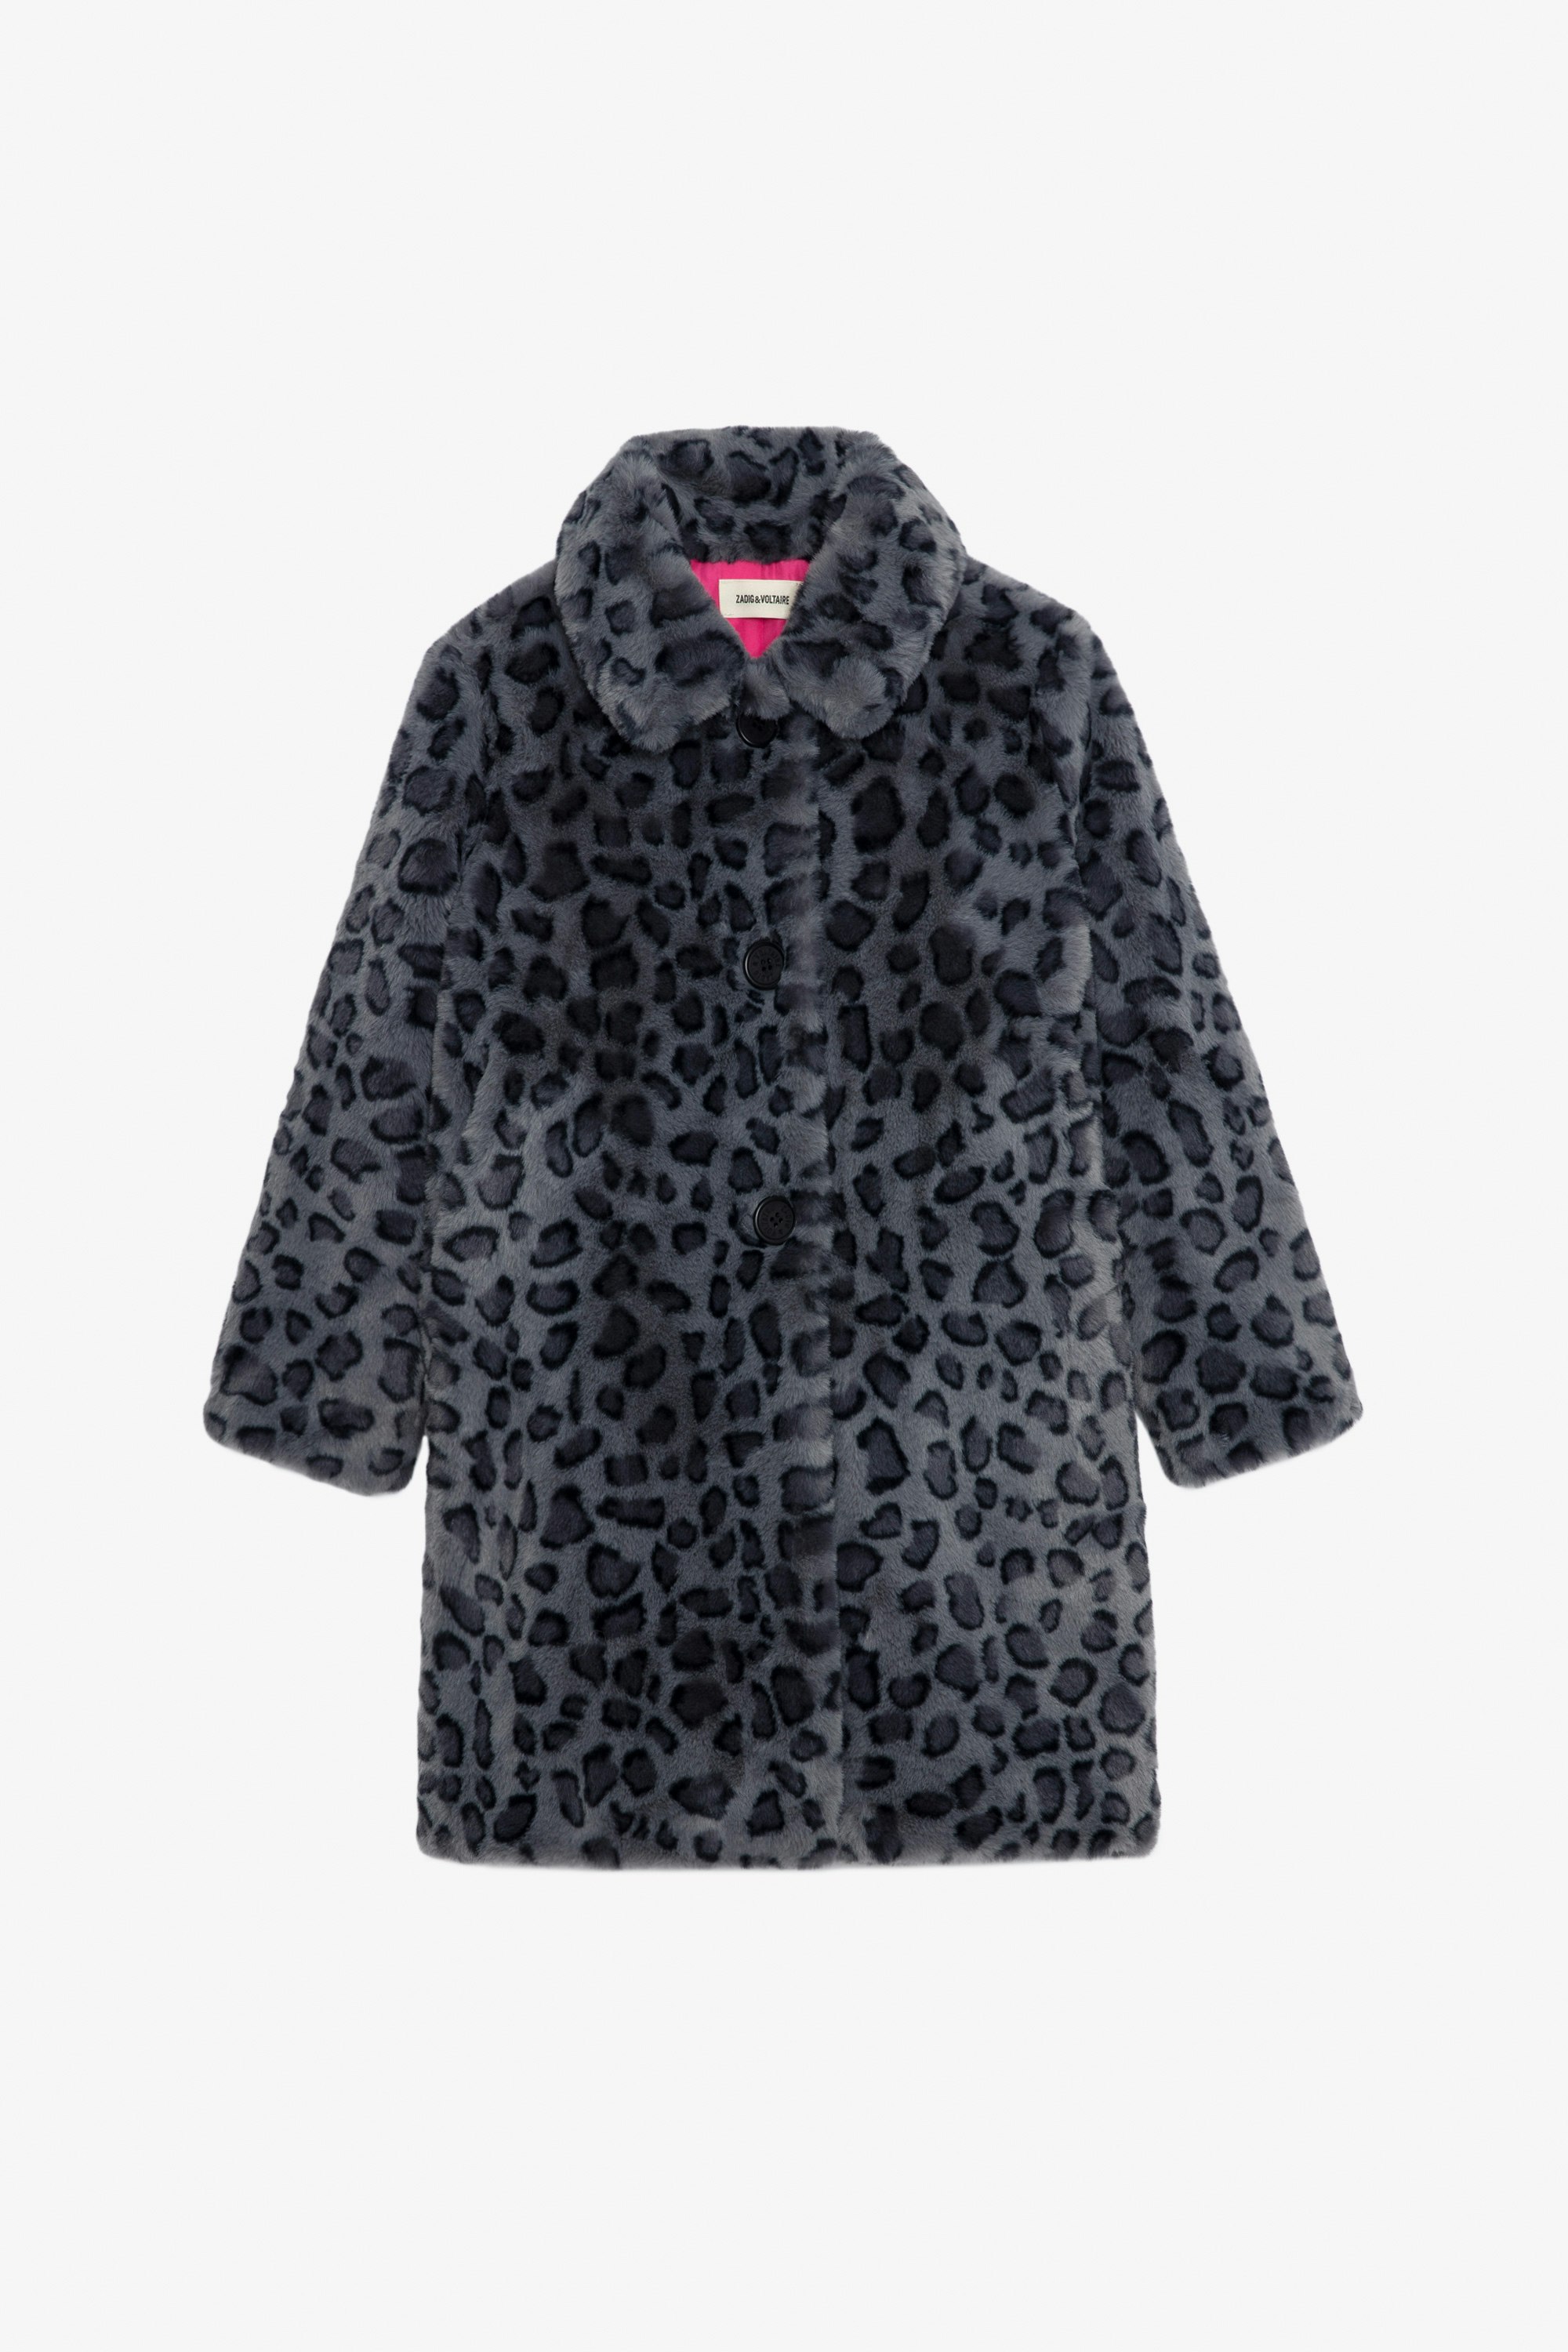 Madeleine Girls’ Coat - Girls’ black leopard-print fleece coat with contrasting lining.